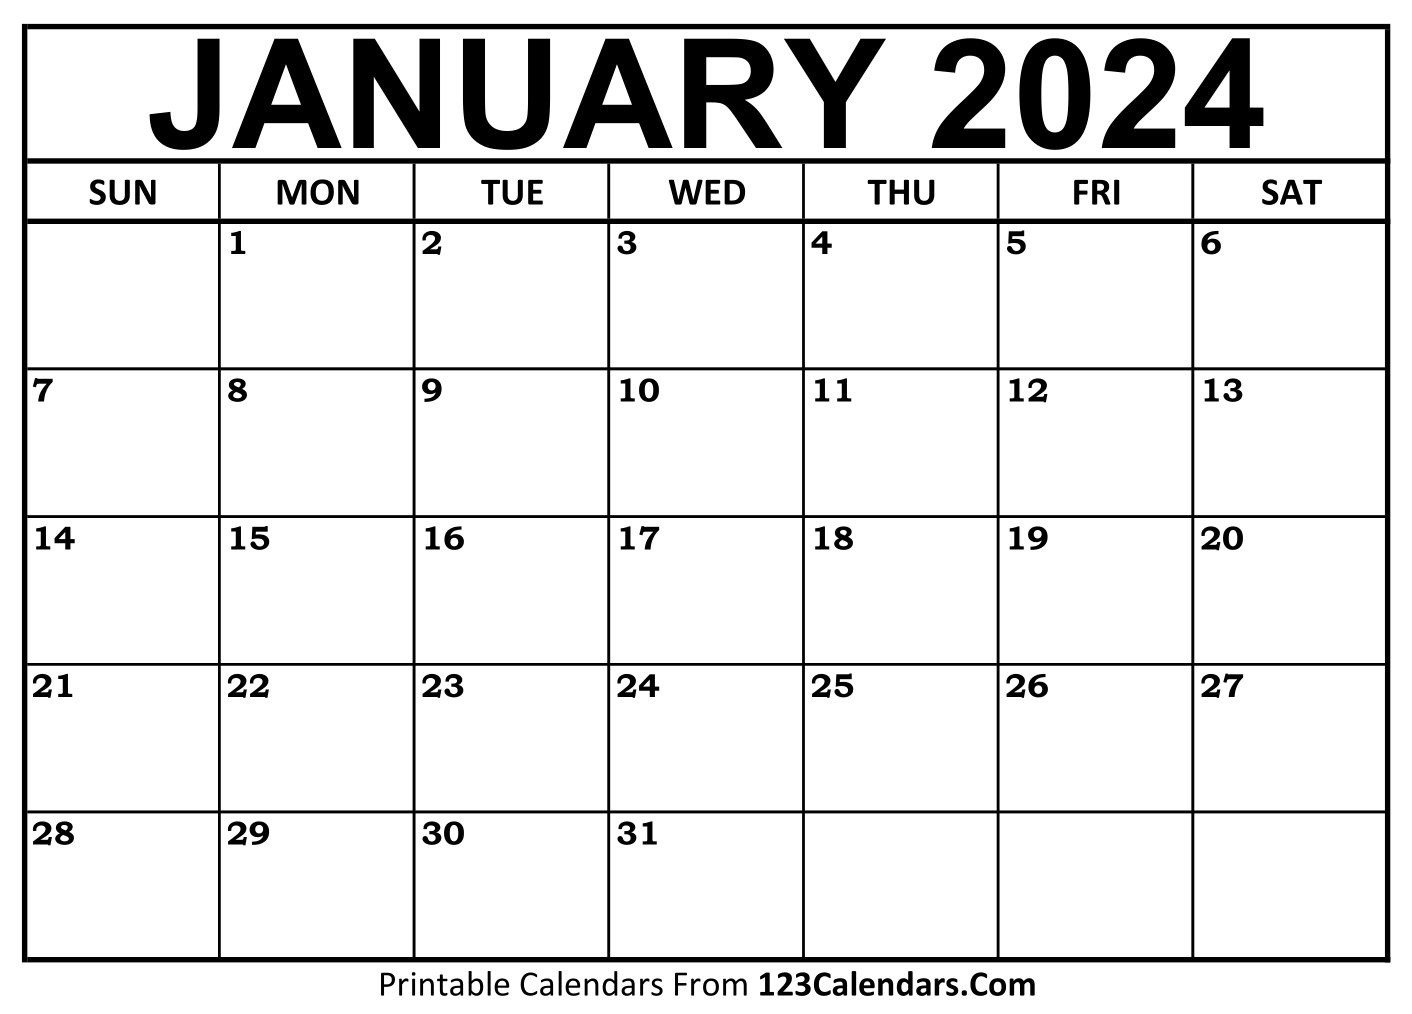 Printable January 2024 Calendar Templates - 123Calendars | January 2024 Calendar Printable